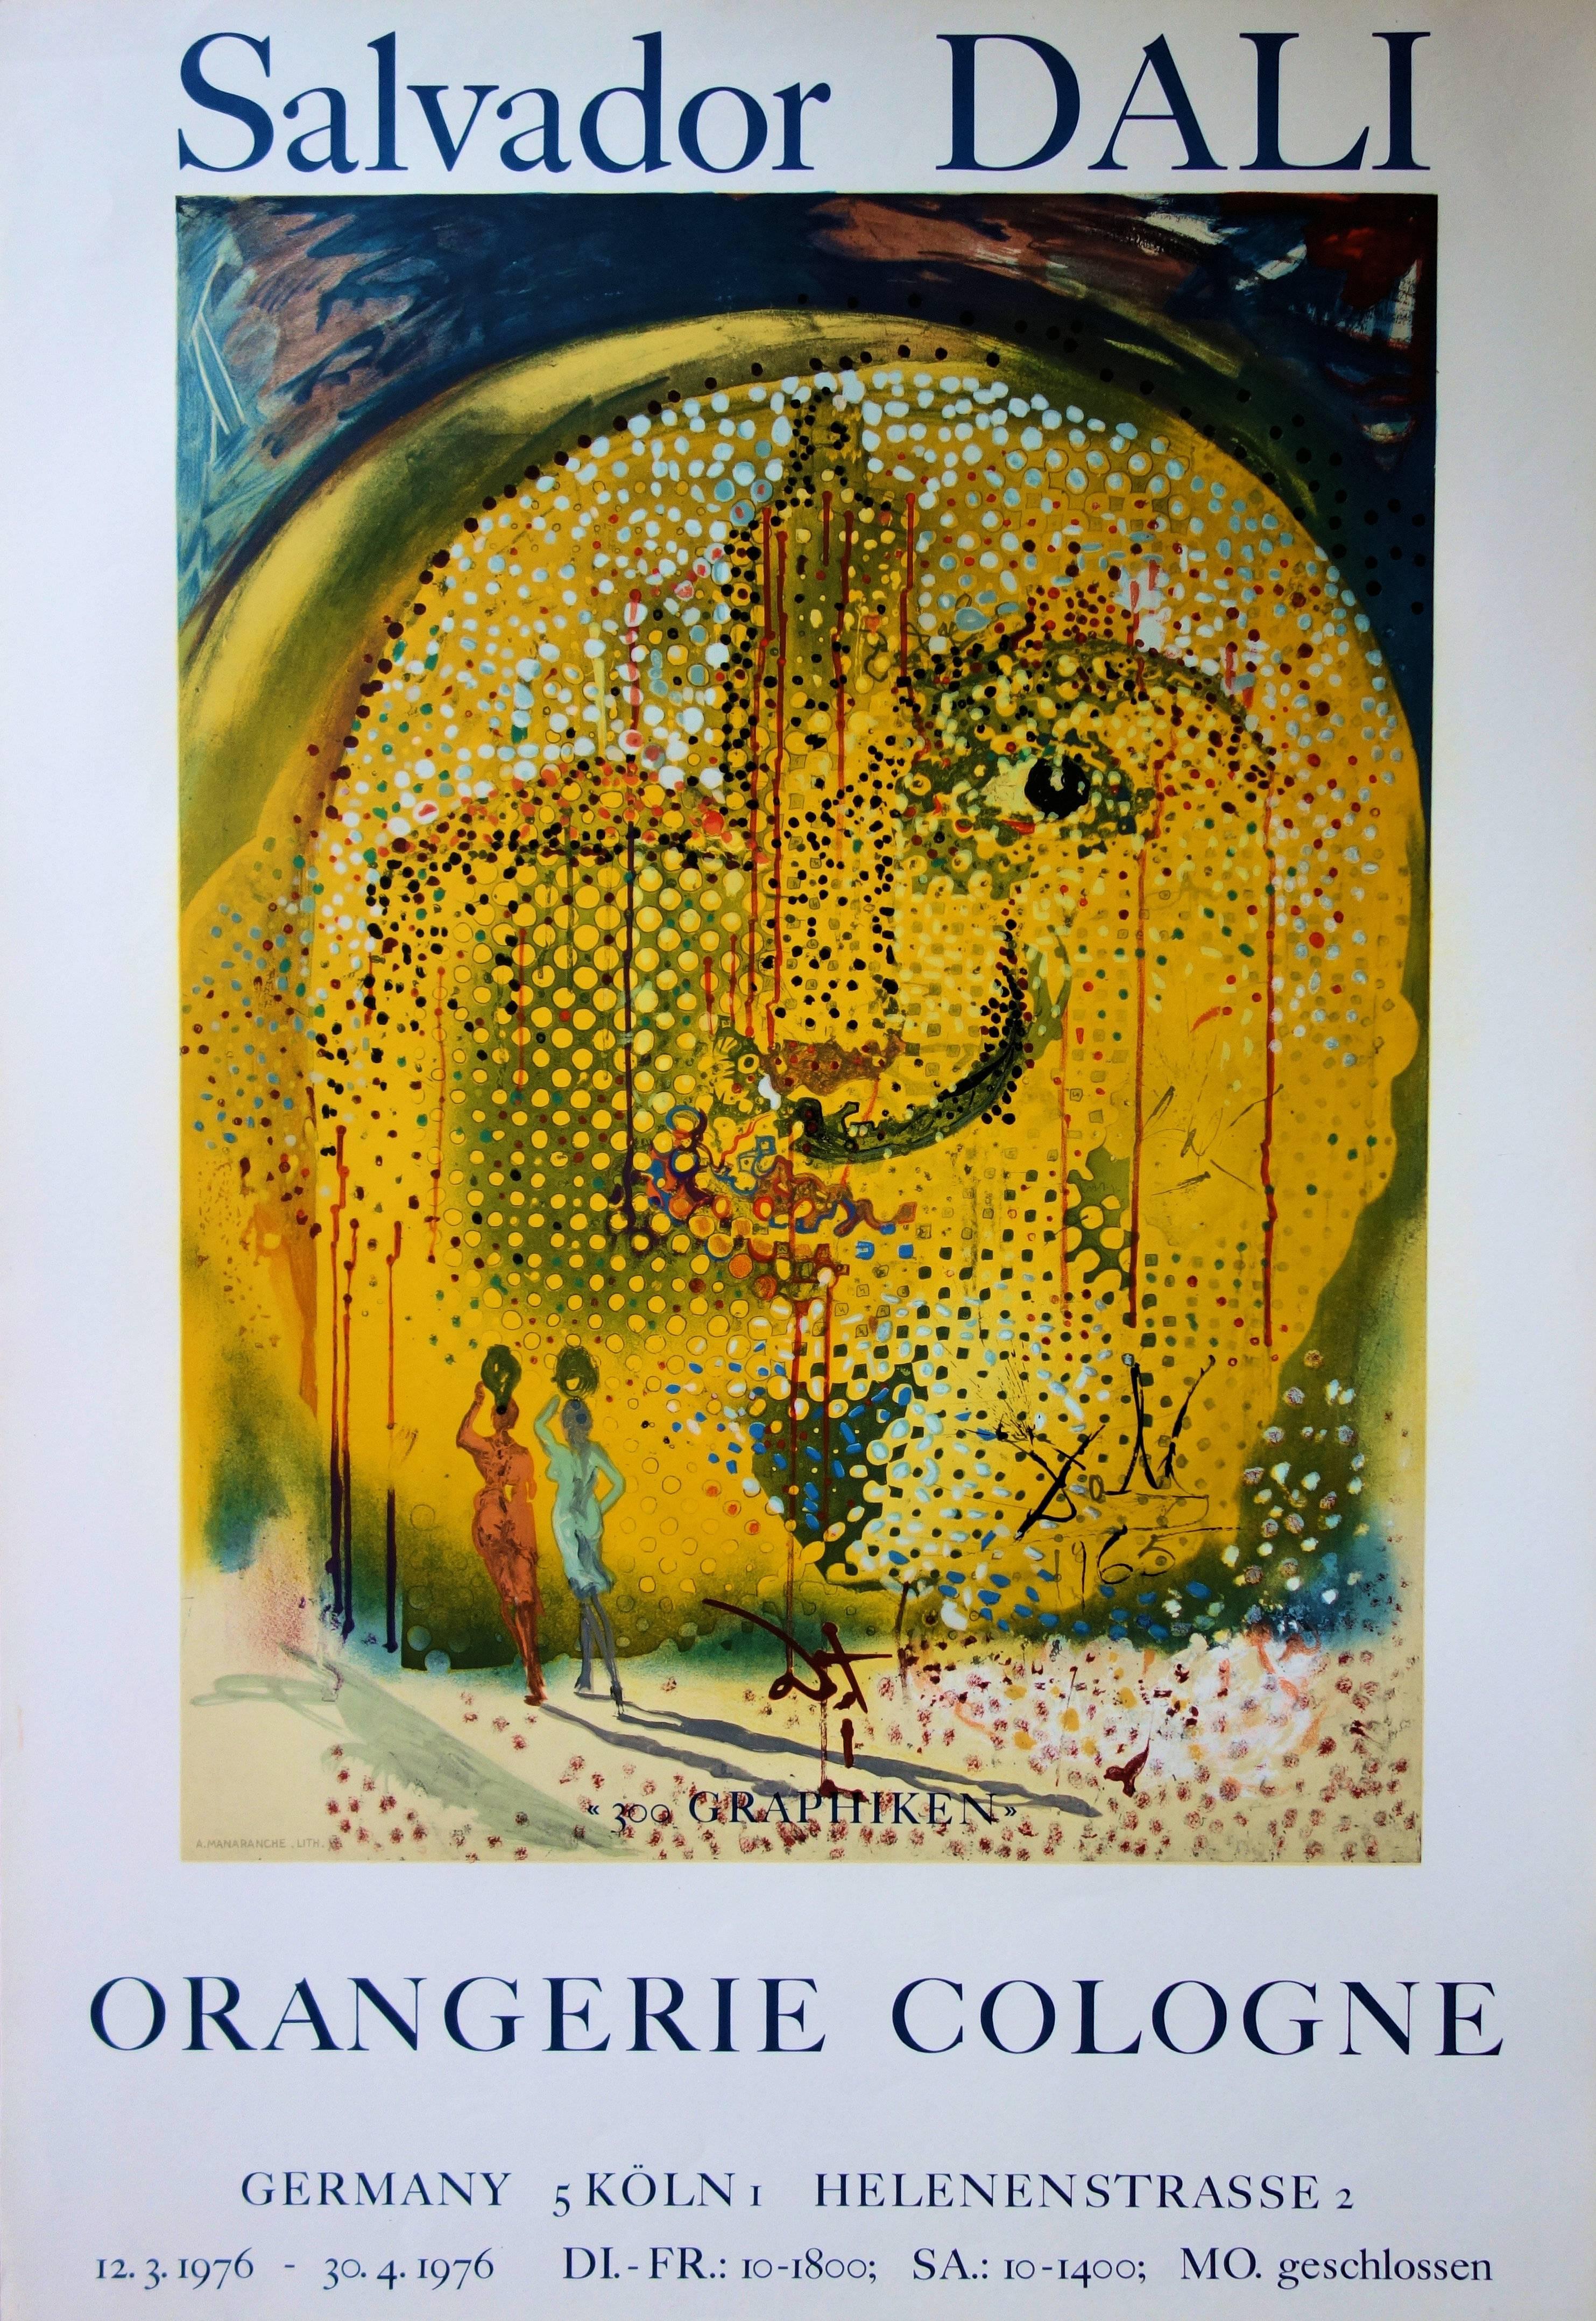 (after) Salvador Dali Figurative Print - Sol y Dali - Rare Vintage Lithograph Poster - Mourlot 1967